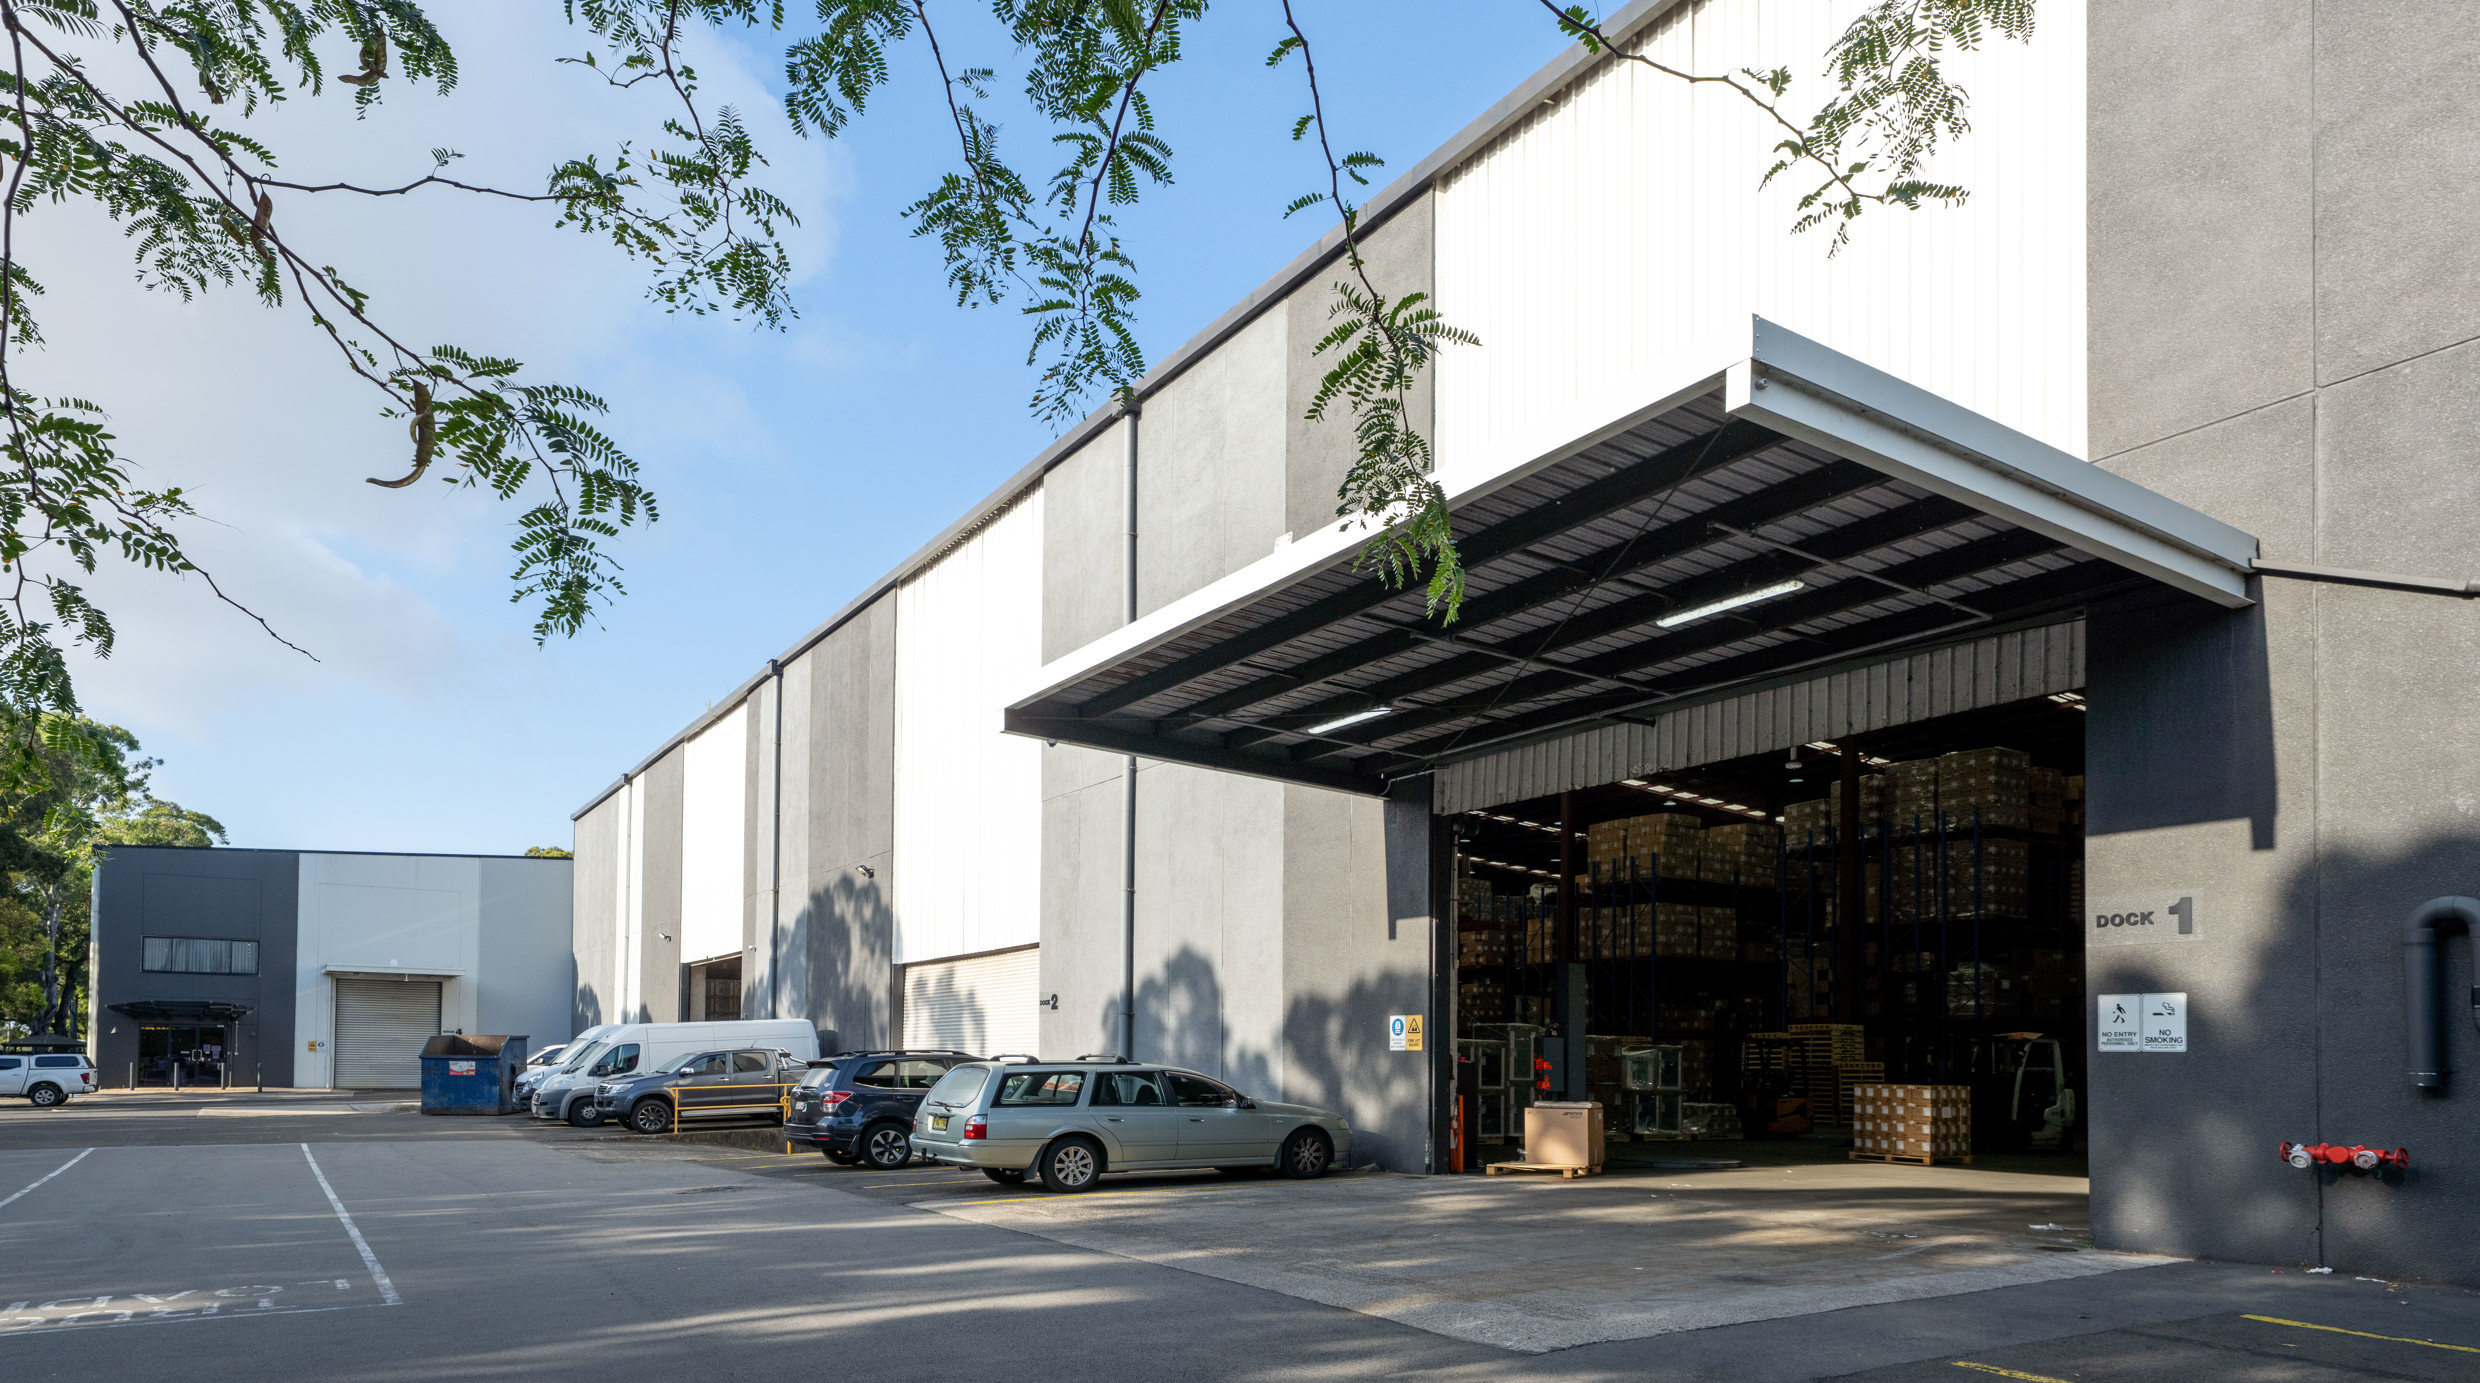 Baker street, Side Warehouse Image View 